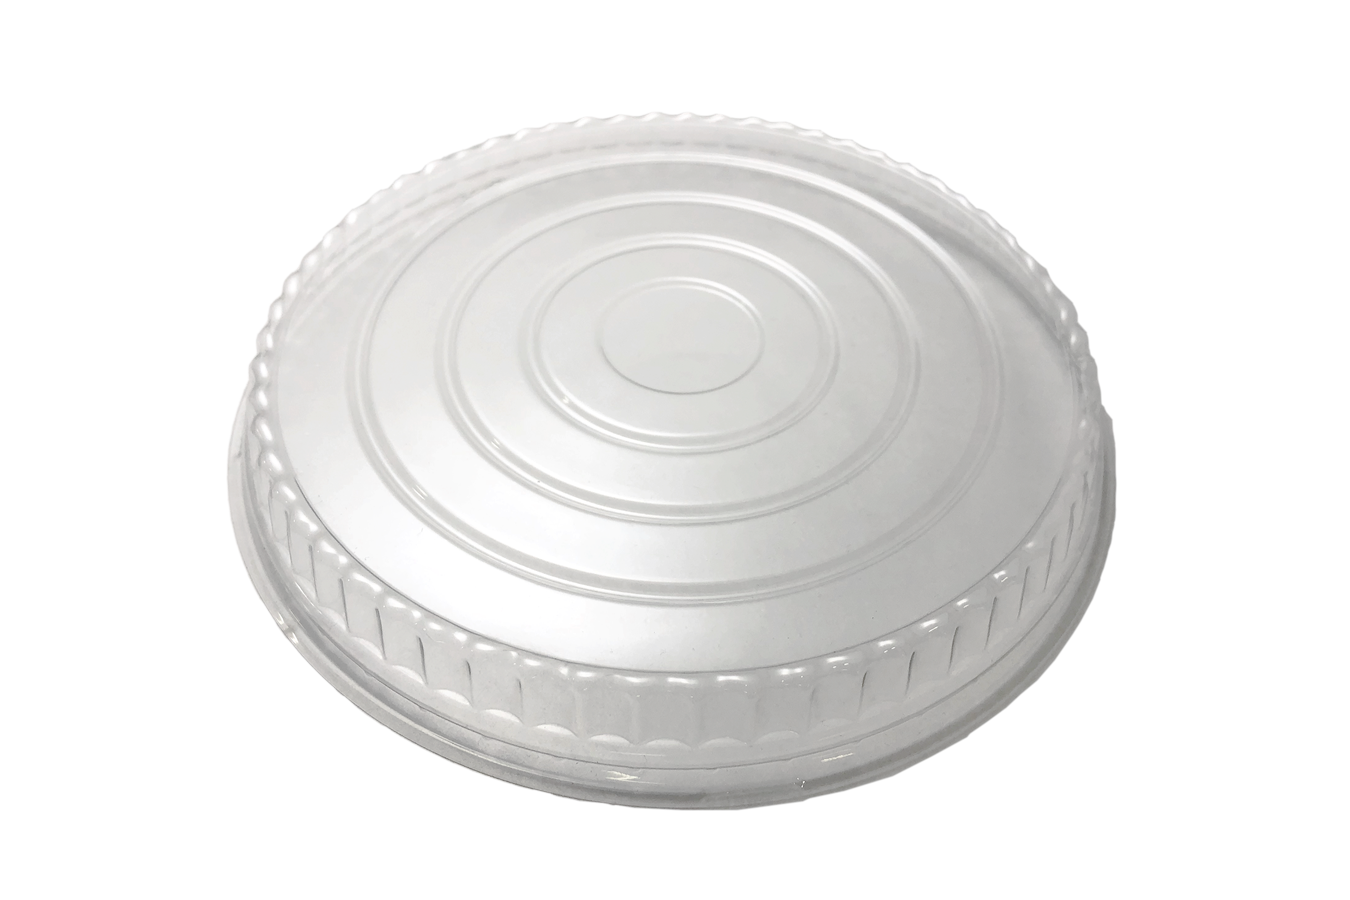 Line art illustration of clear transparent plastic non-vented lid for Ecopax 32 oz Athena paper bowl